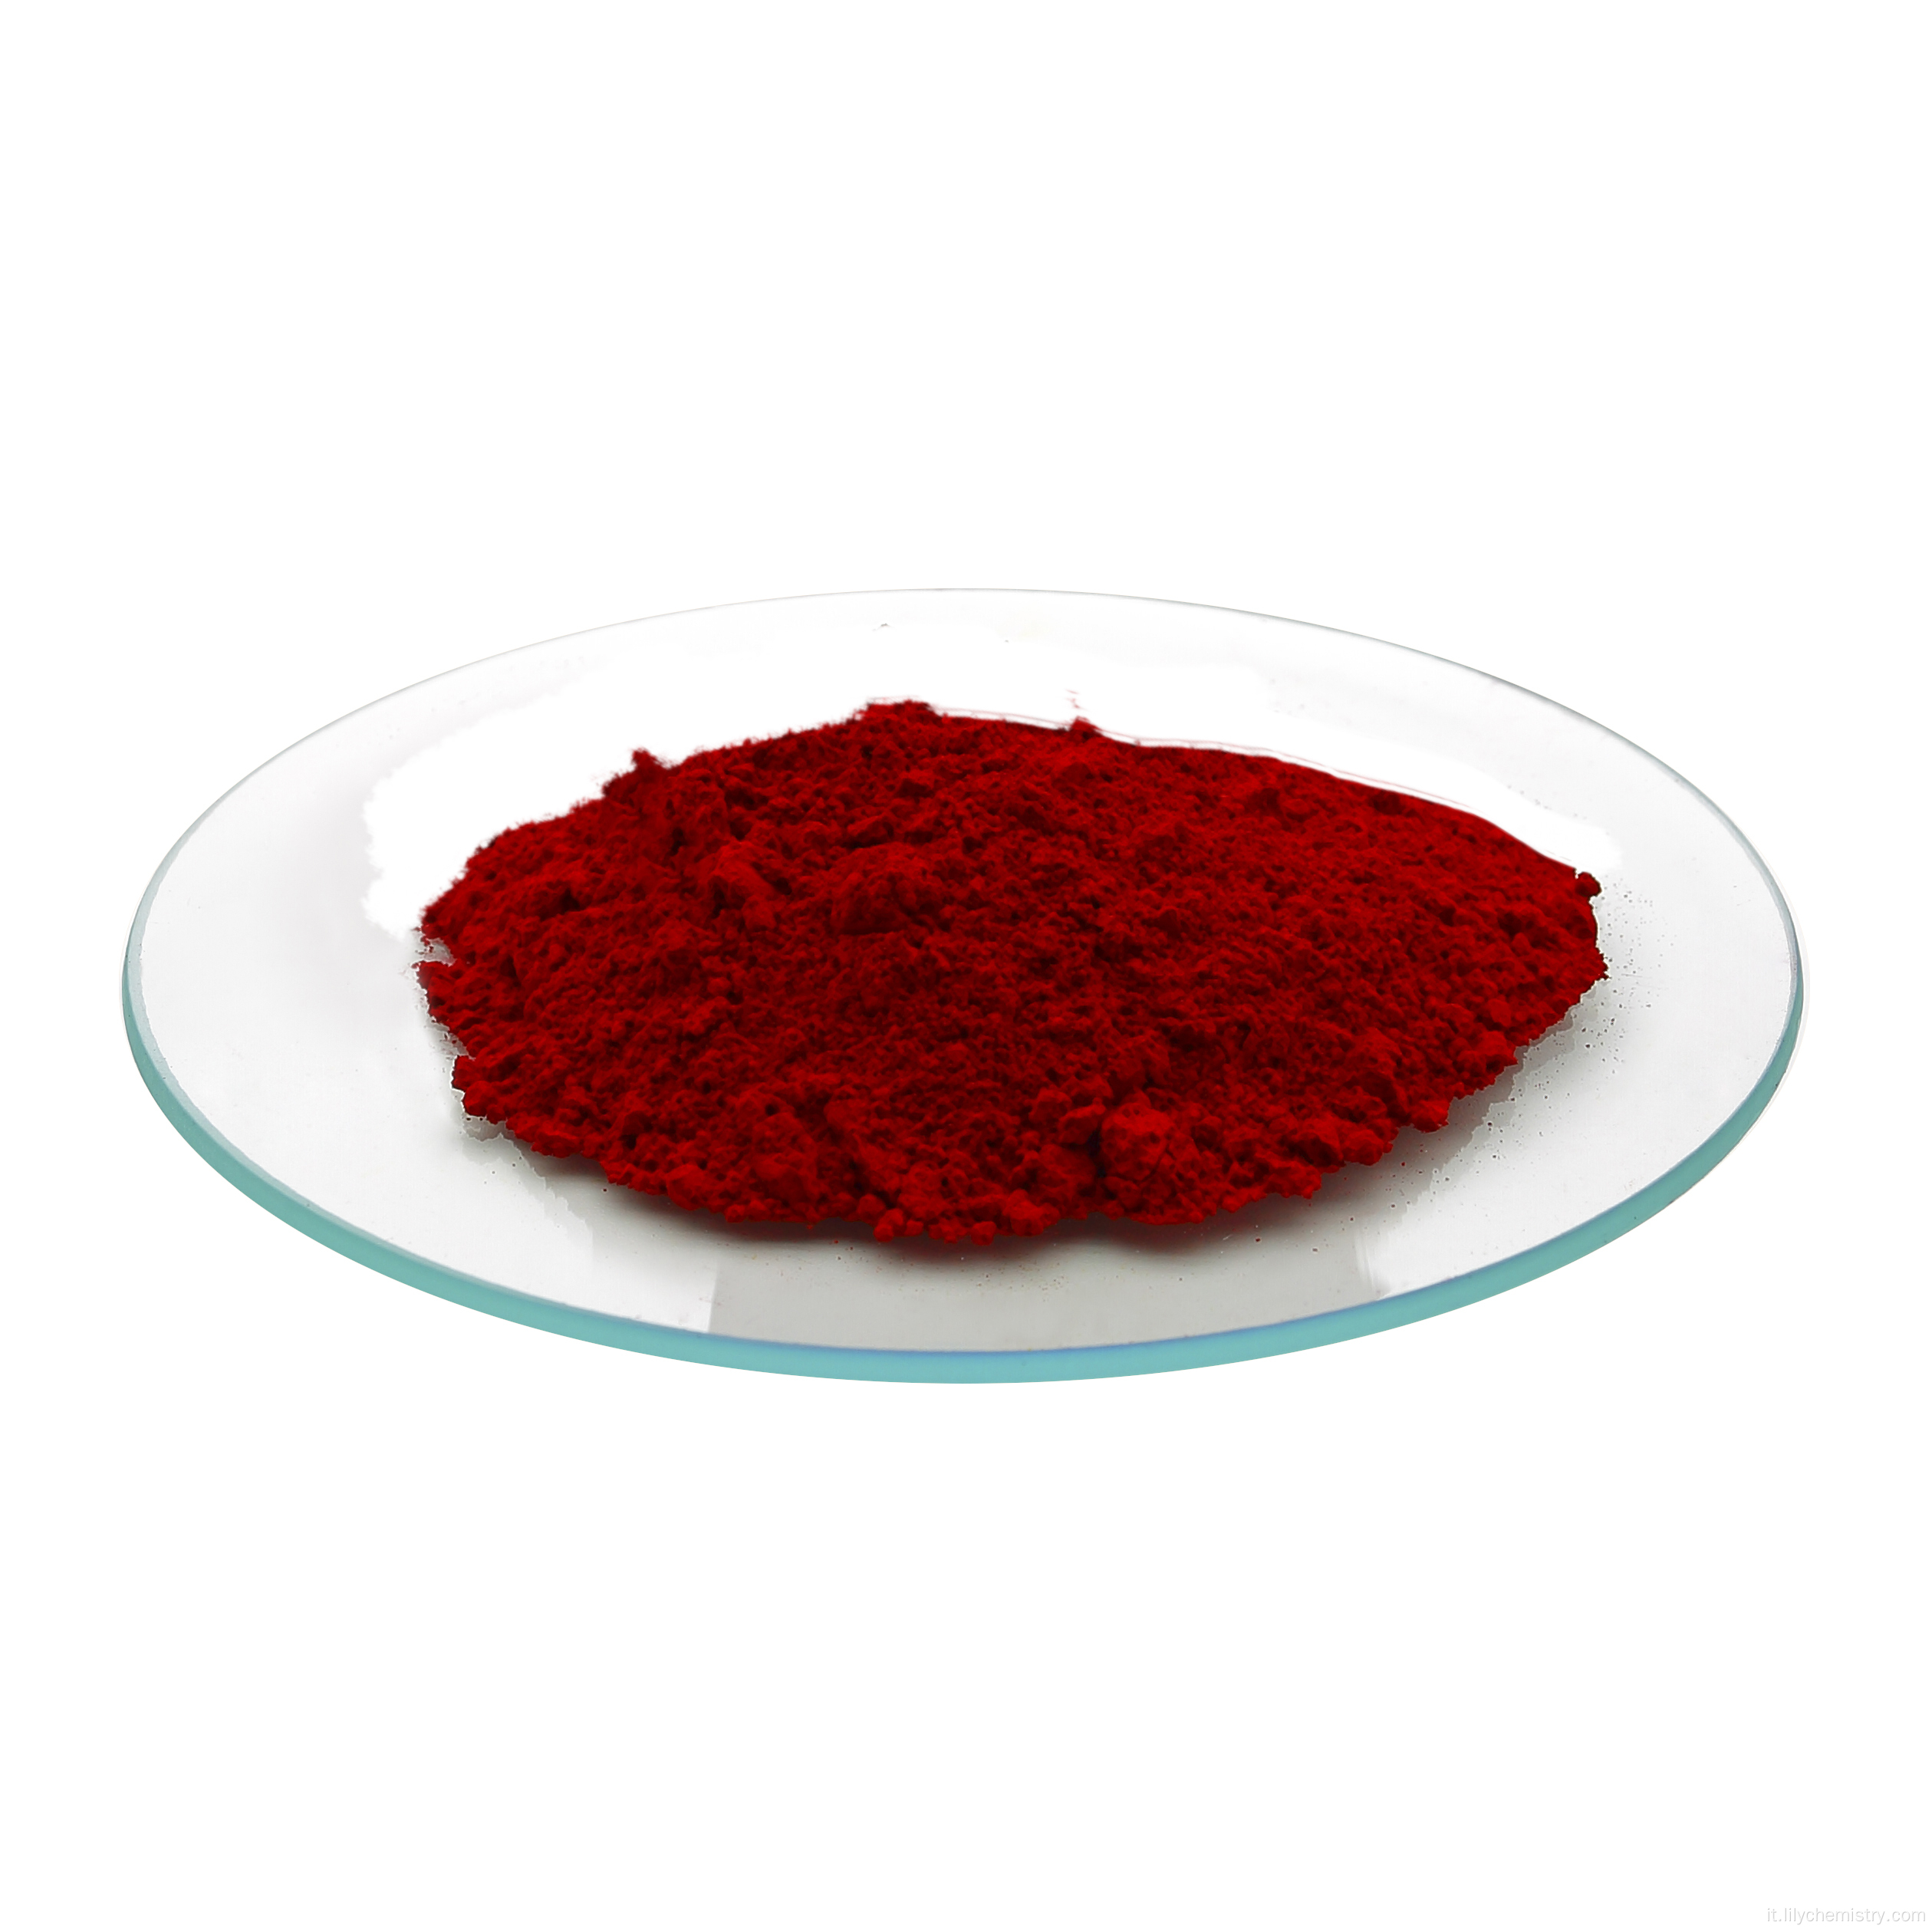 Ombra bluastra pigmento organico rosso bhgl pr 57: 1